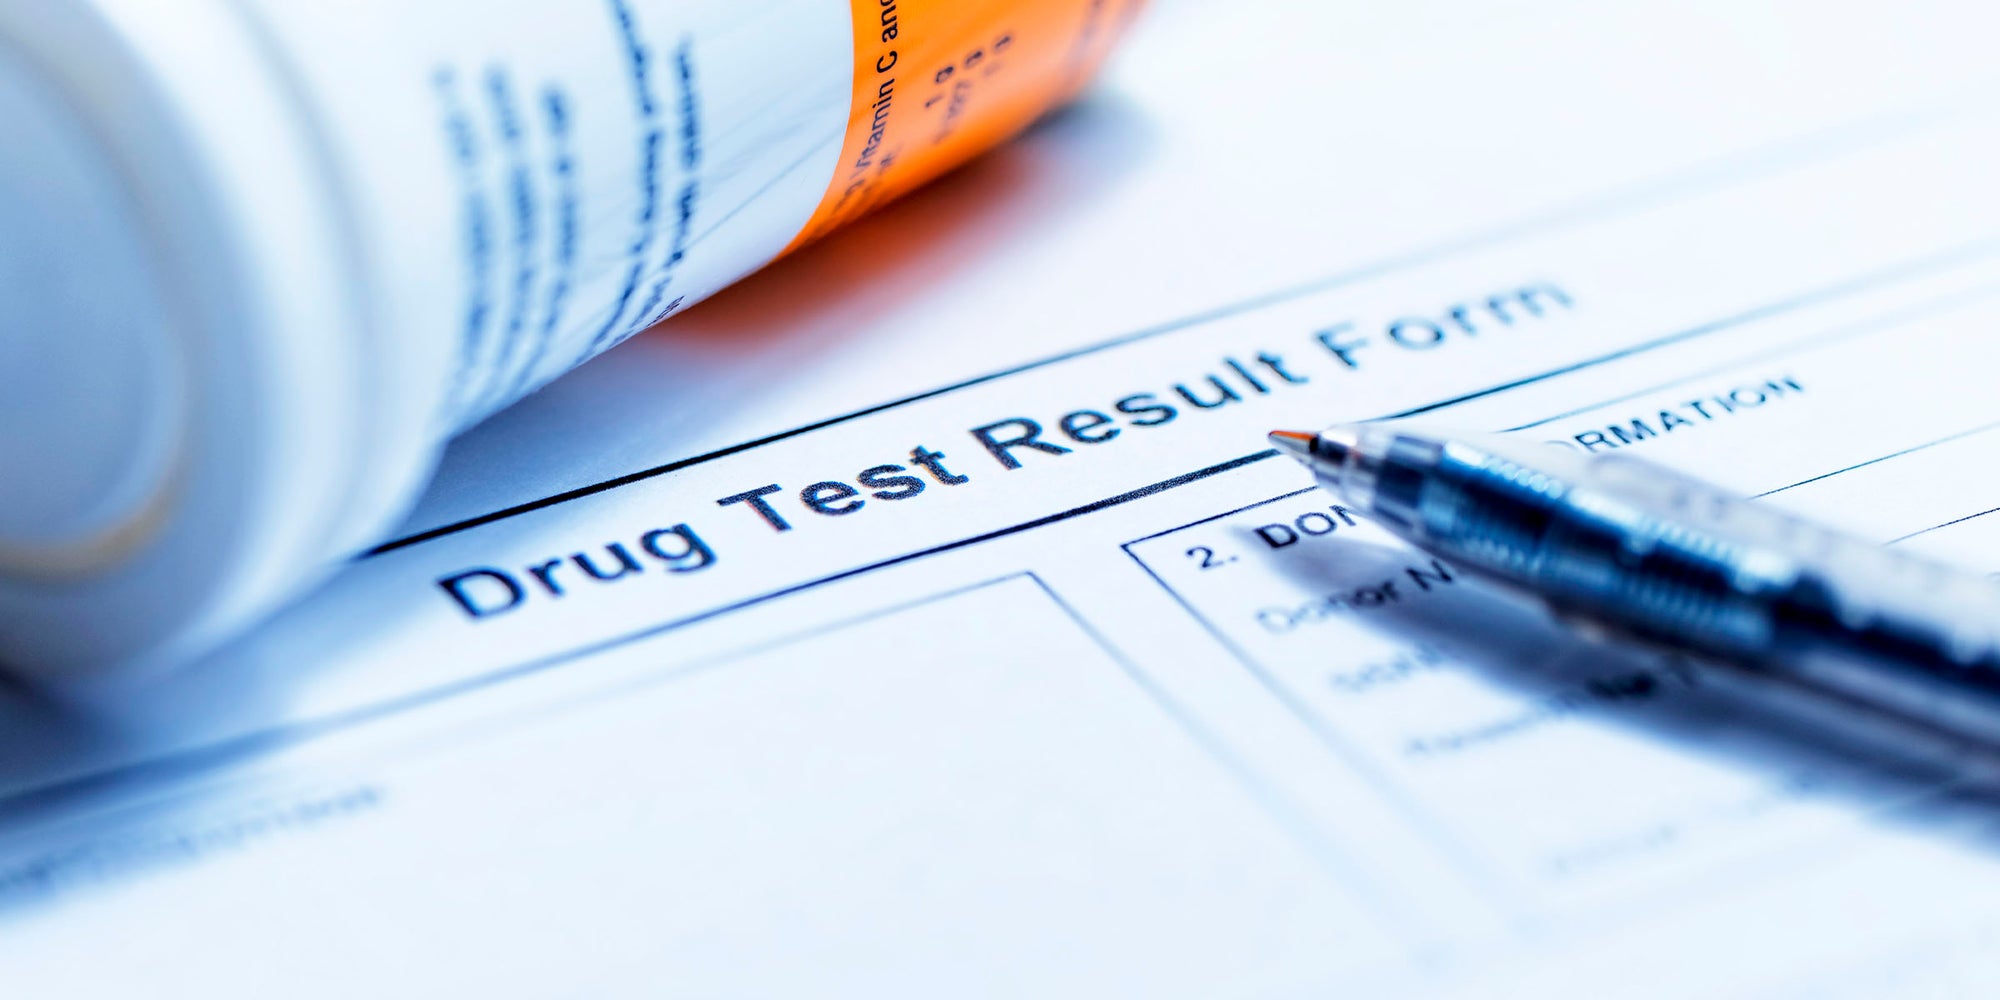 Does CBD Show Up on a Drug Test?